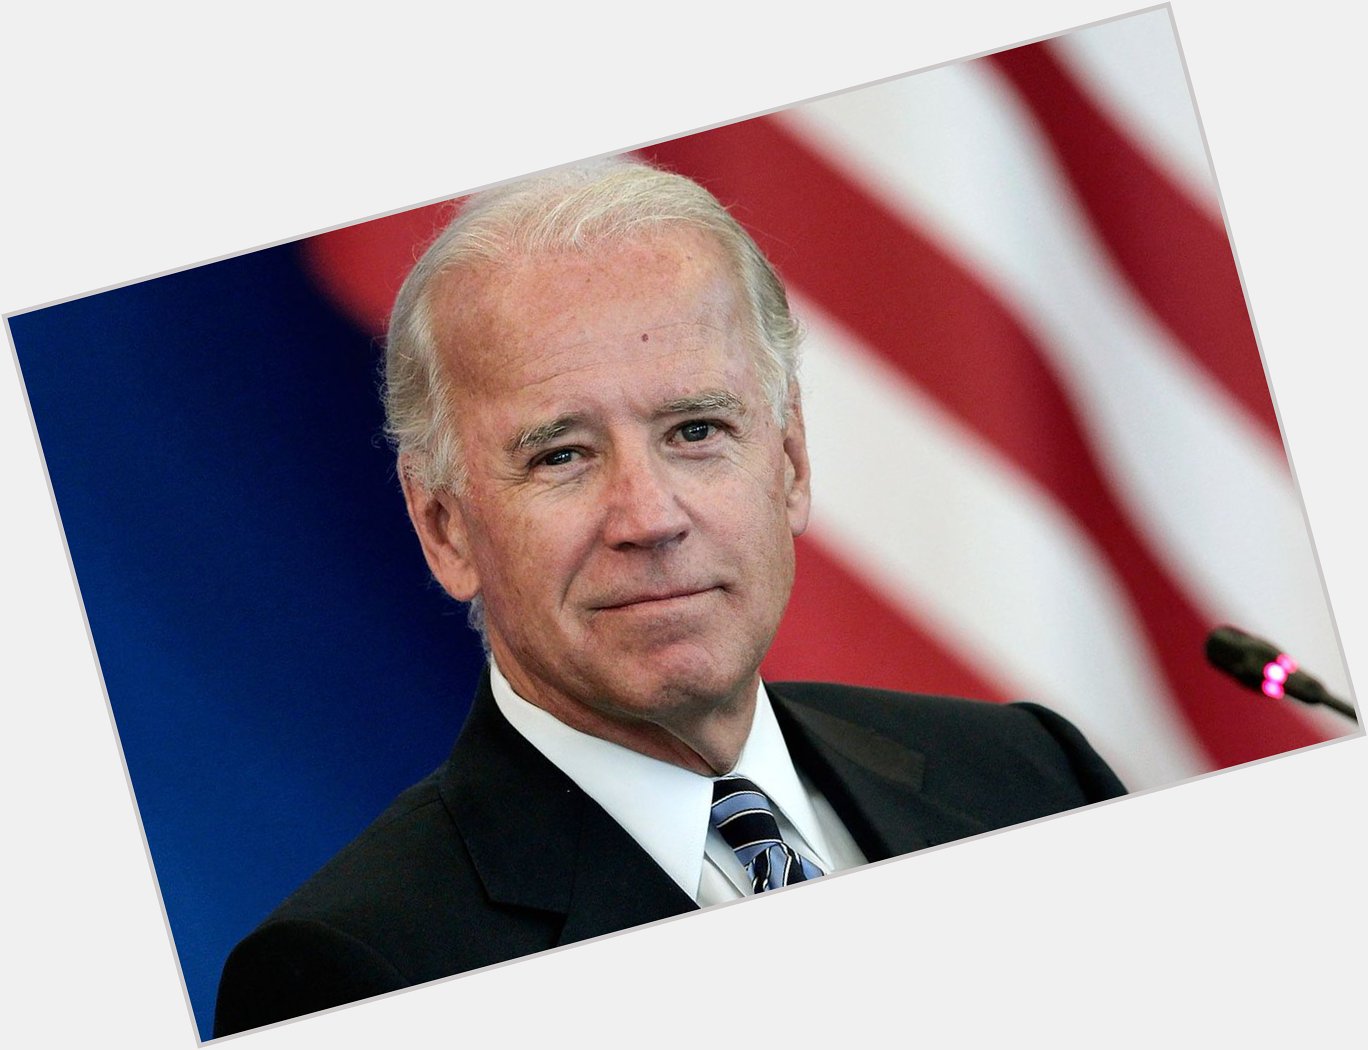 Happy Birthday, Joe Biden!
You bring the swag.
*73 finger gun salute* 